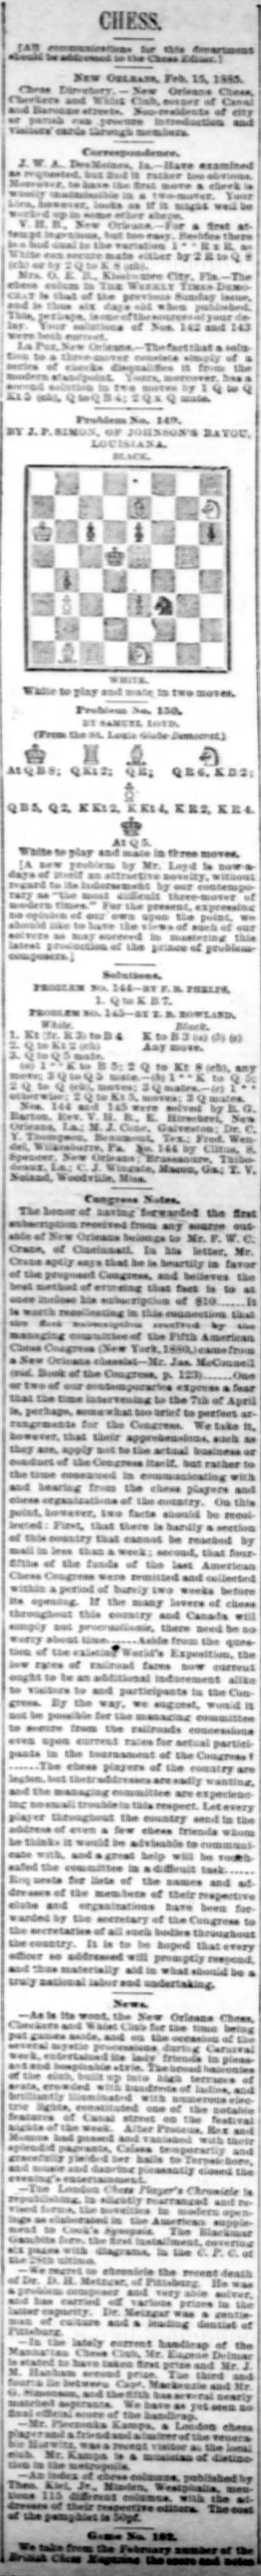 1885.02.22-01 New Orleans Times-Democrat.jpg